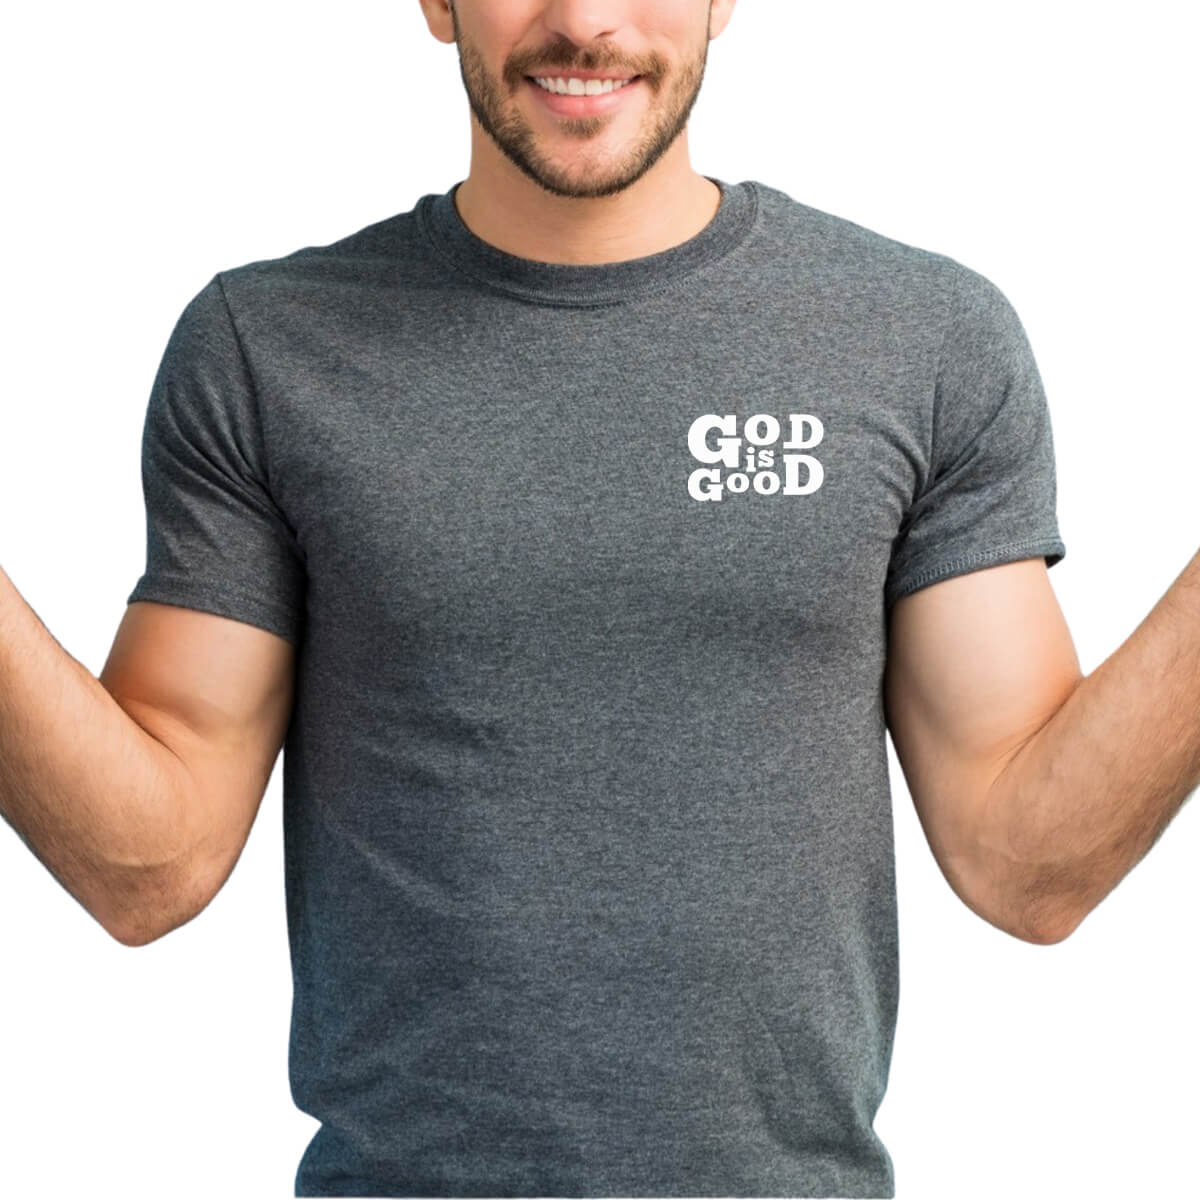 God Is Good Pocket Print Men's T-Shirt